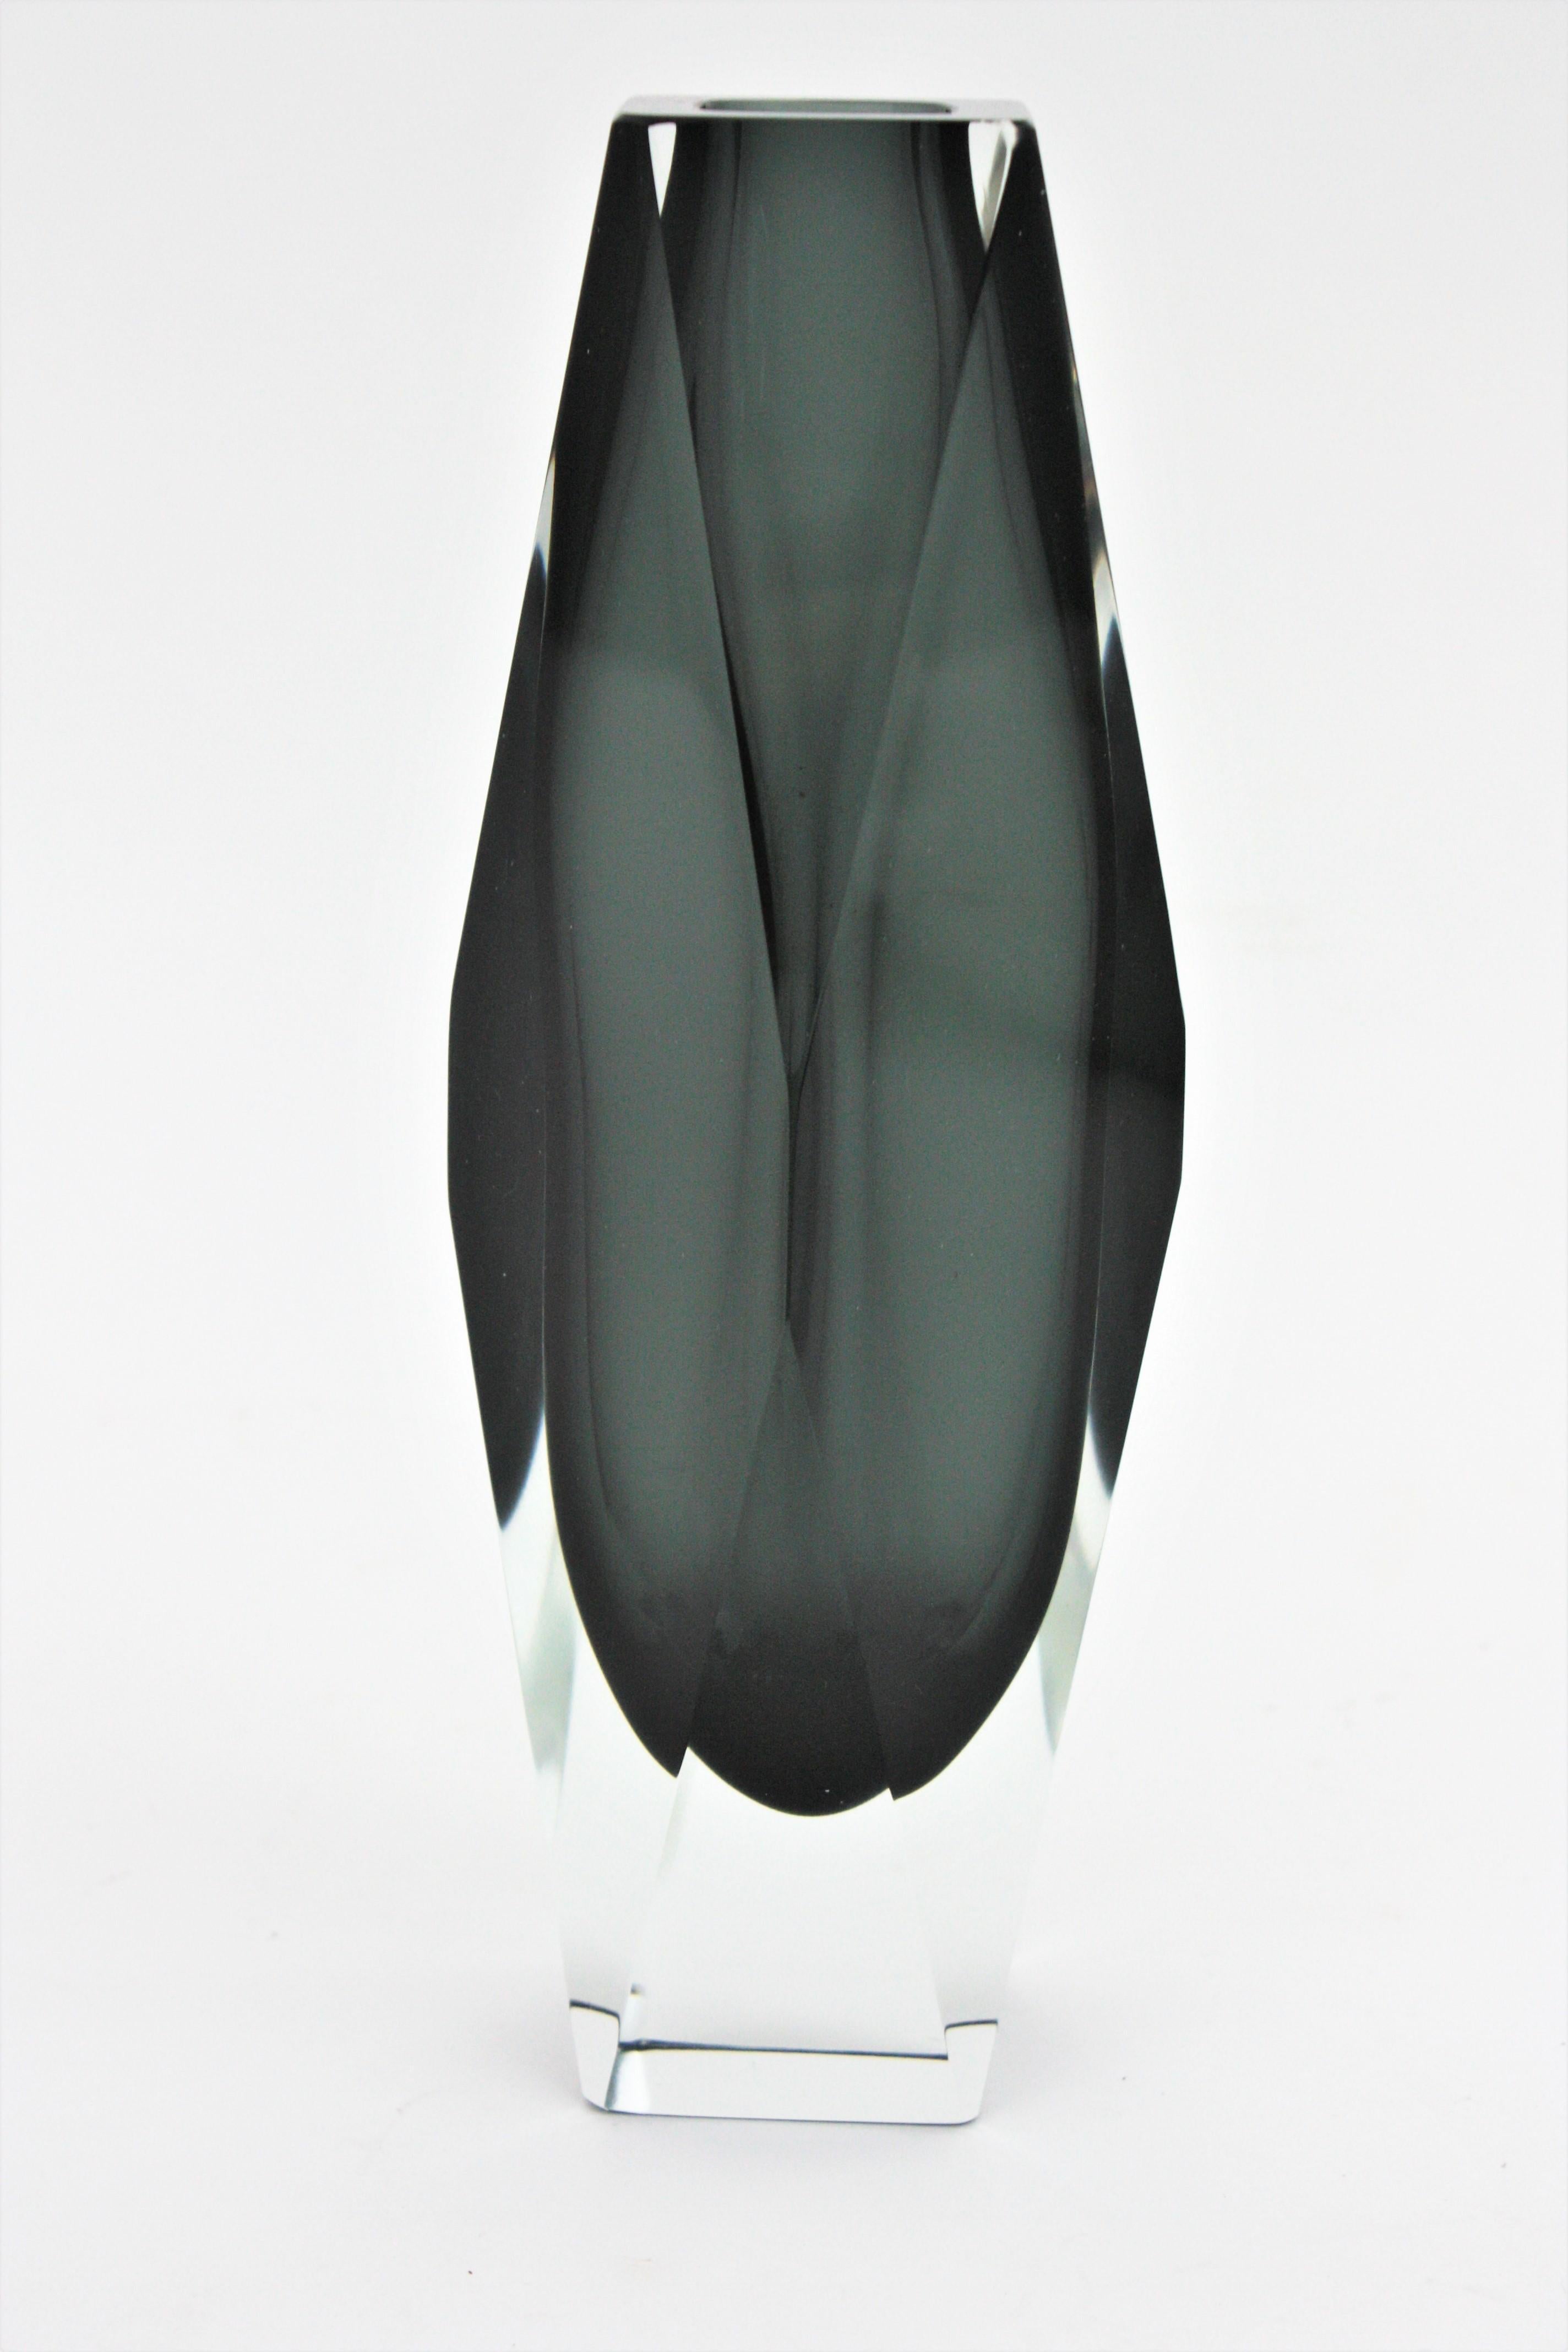 Riesige Mandruzzato Murano Sommerso-Vase aus Rauchgrauem, klarem, facettiertem Kunstglas im Angebot 2